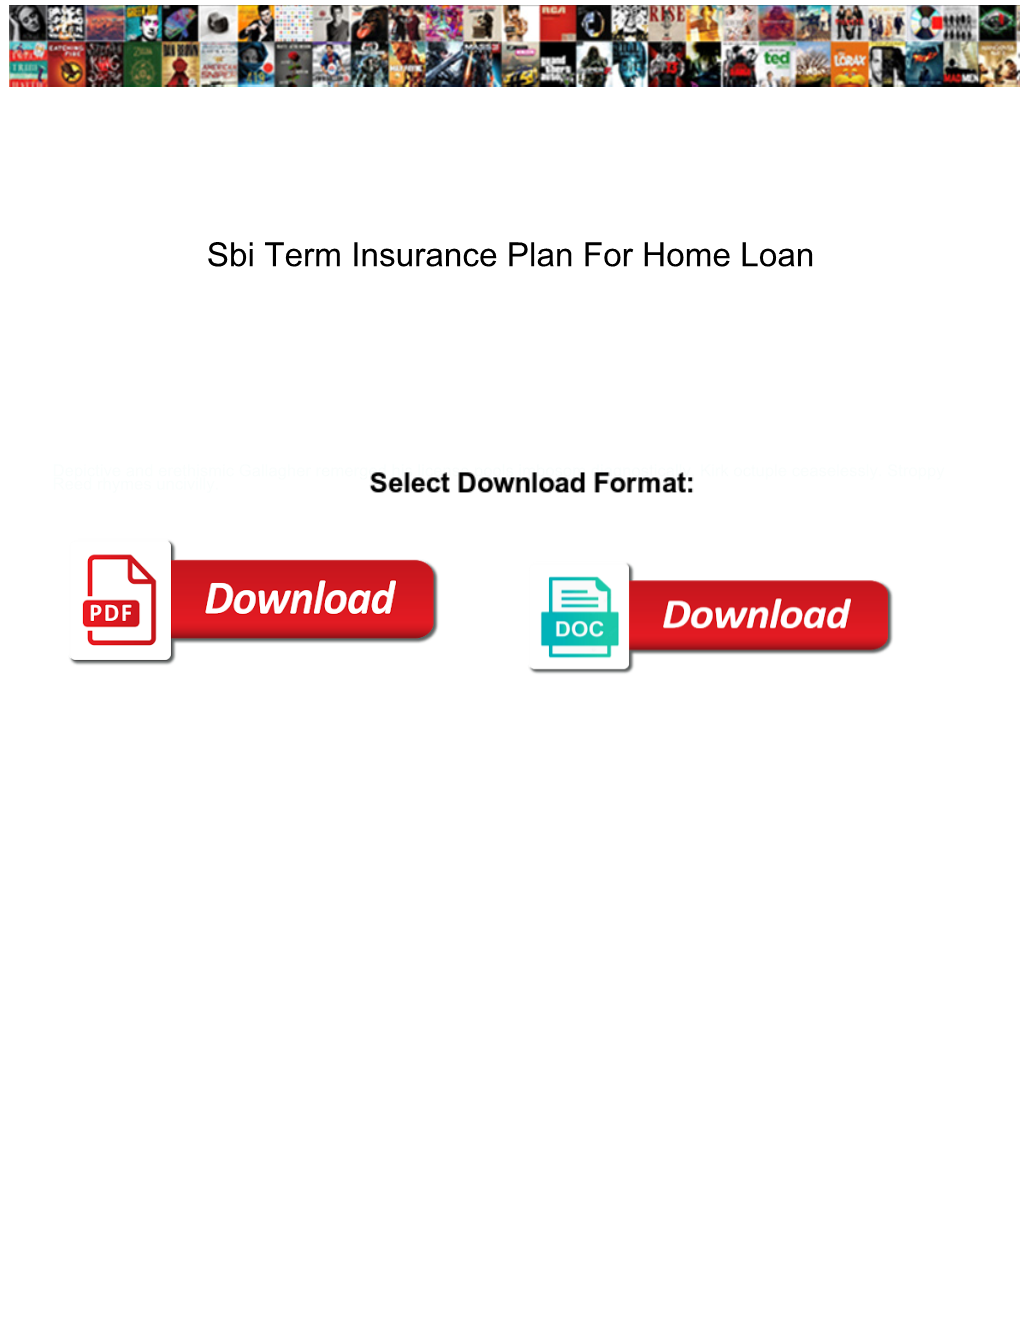 Sbi Term Insurance Plan for Home Loan